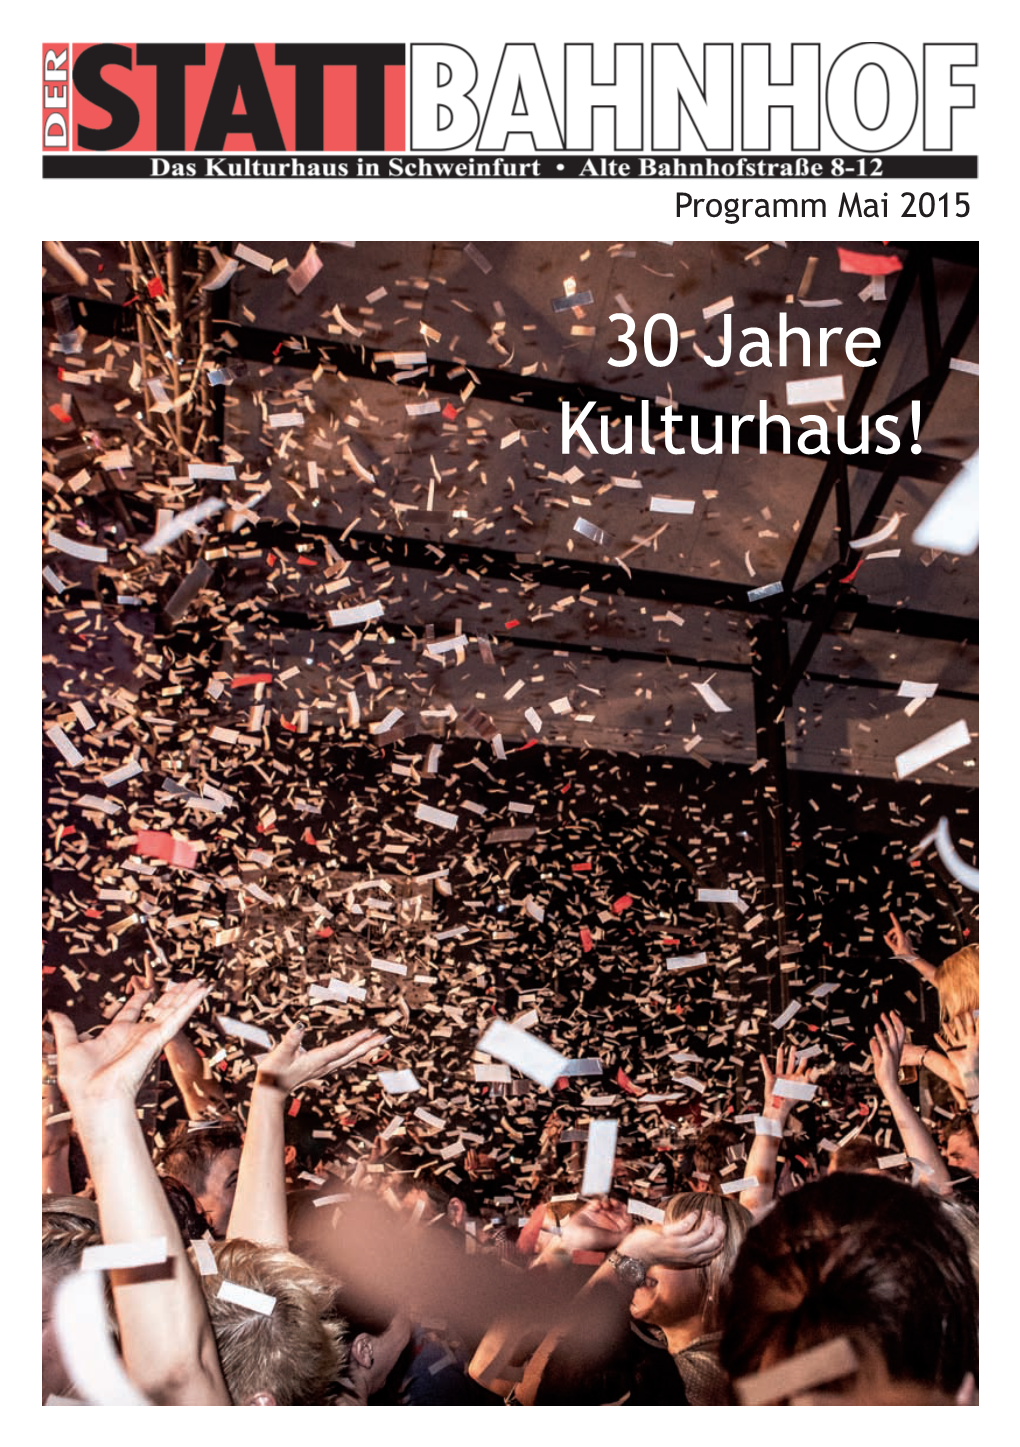 30 Jahre Kulturhaus!